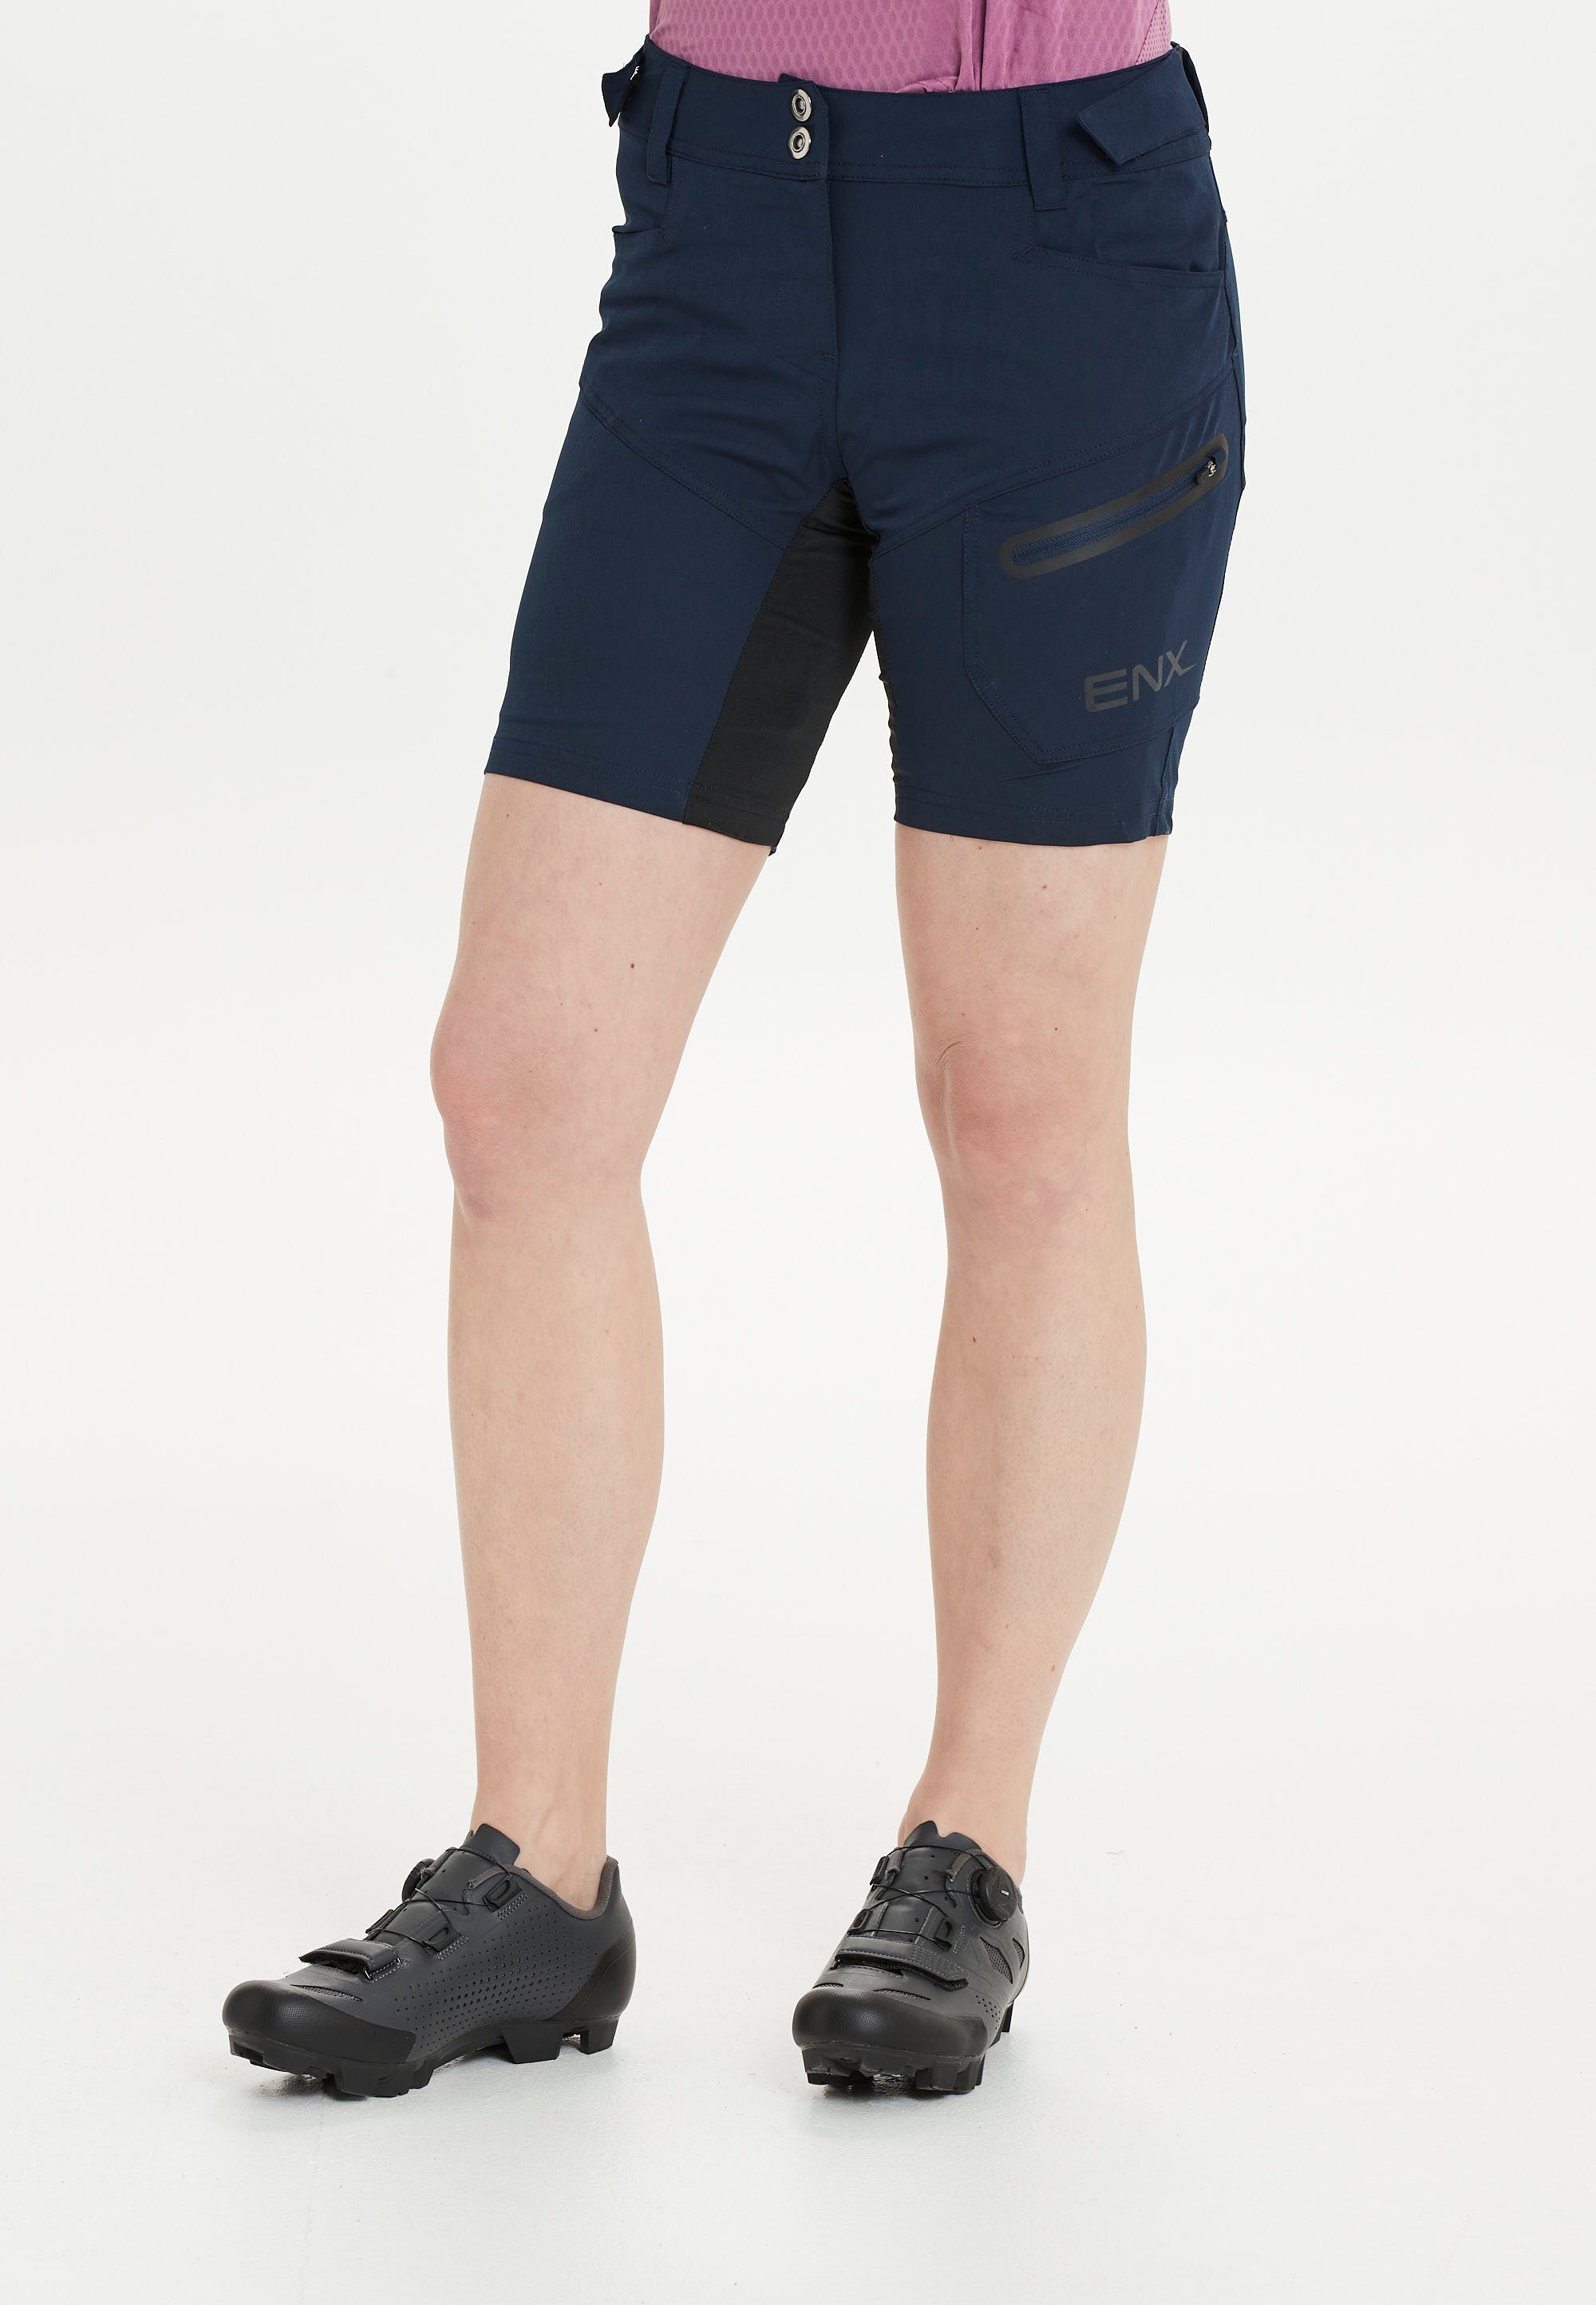 ENDURANCE Radhose Jamilla W 2 in 1 Shorts mit herausnehmbarer Innen-Tights dunkelblau